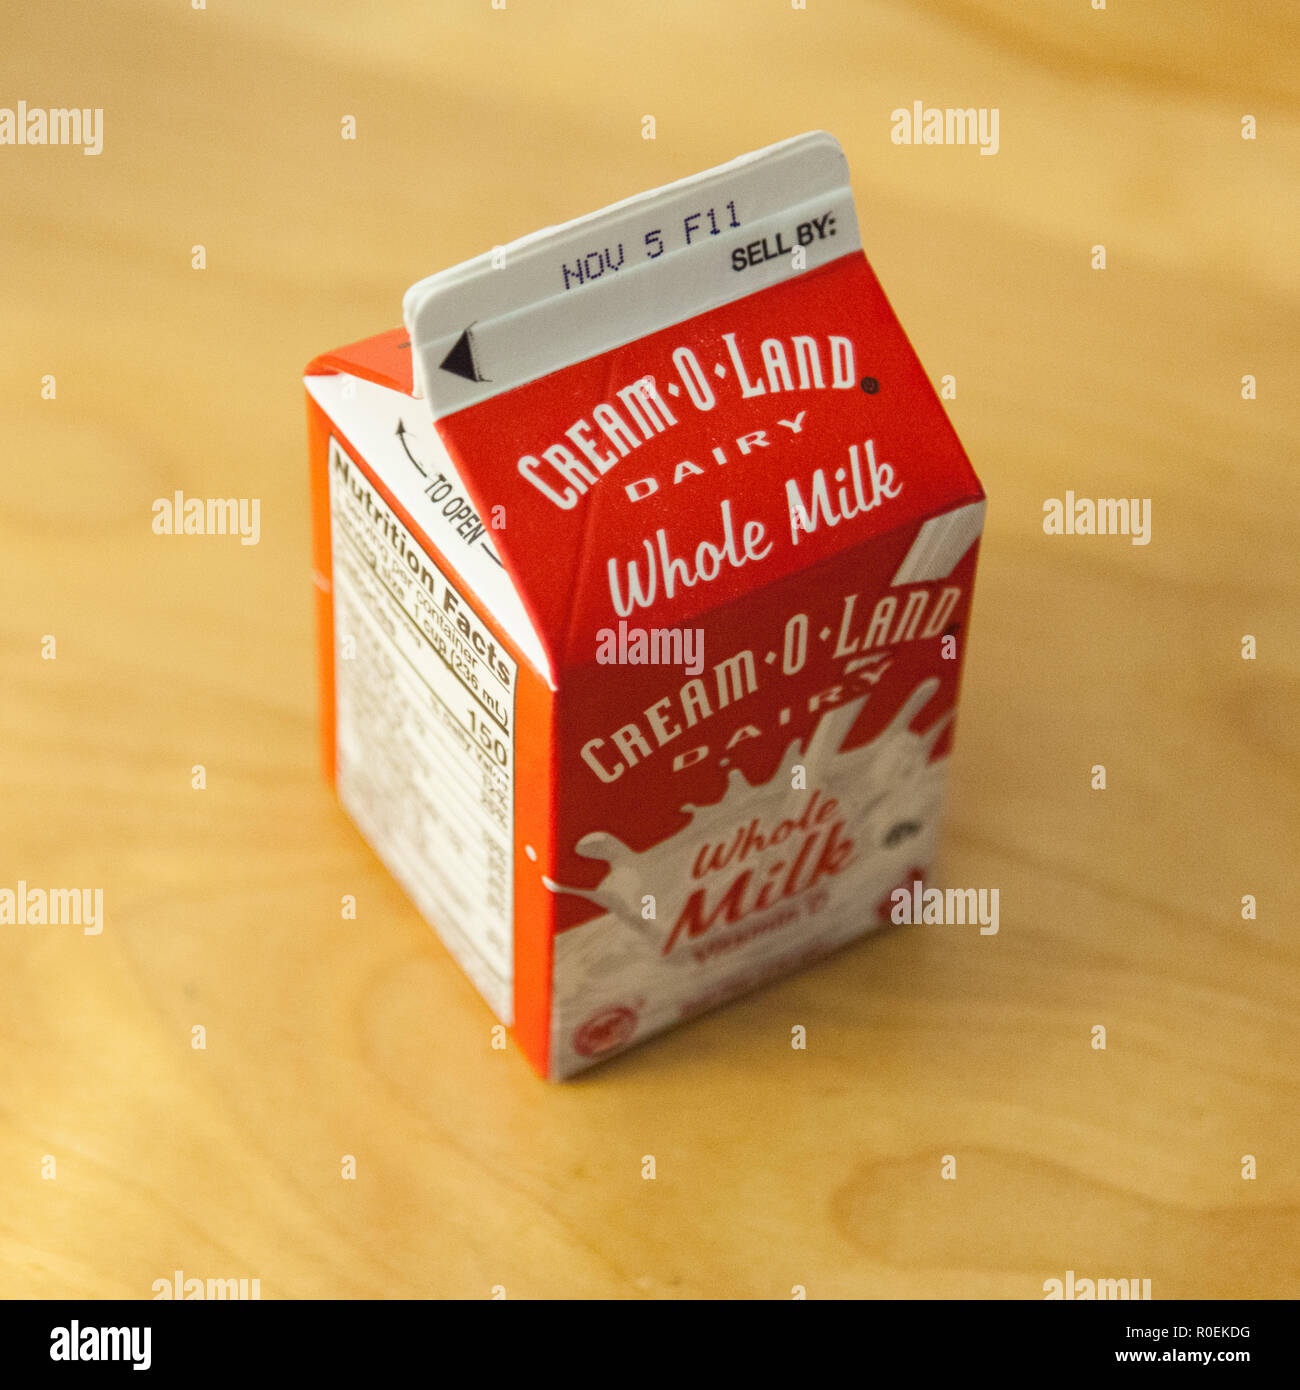 Carton of Cream O Land milk, West Side YMCA, W 63rd Street, New  York City, United States of America. Stock Photo